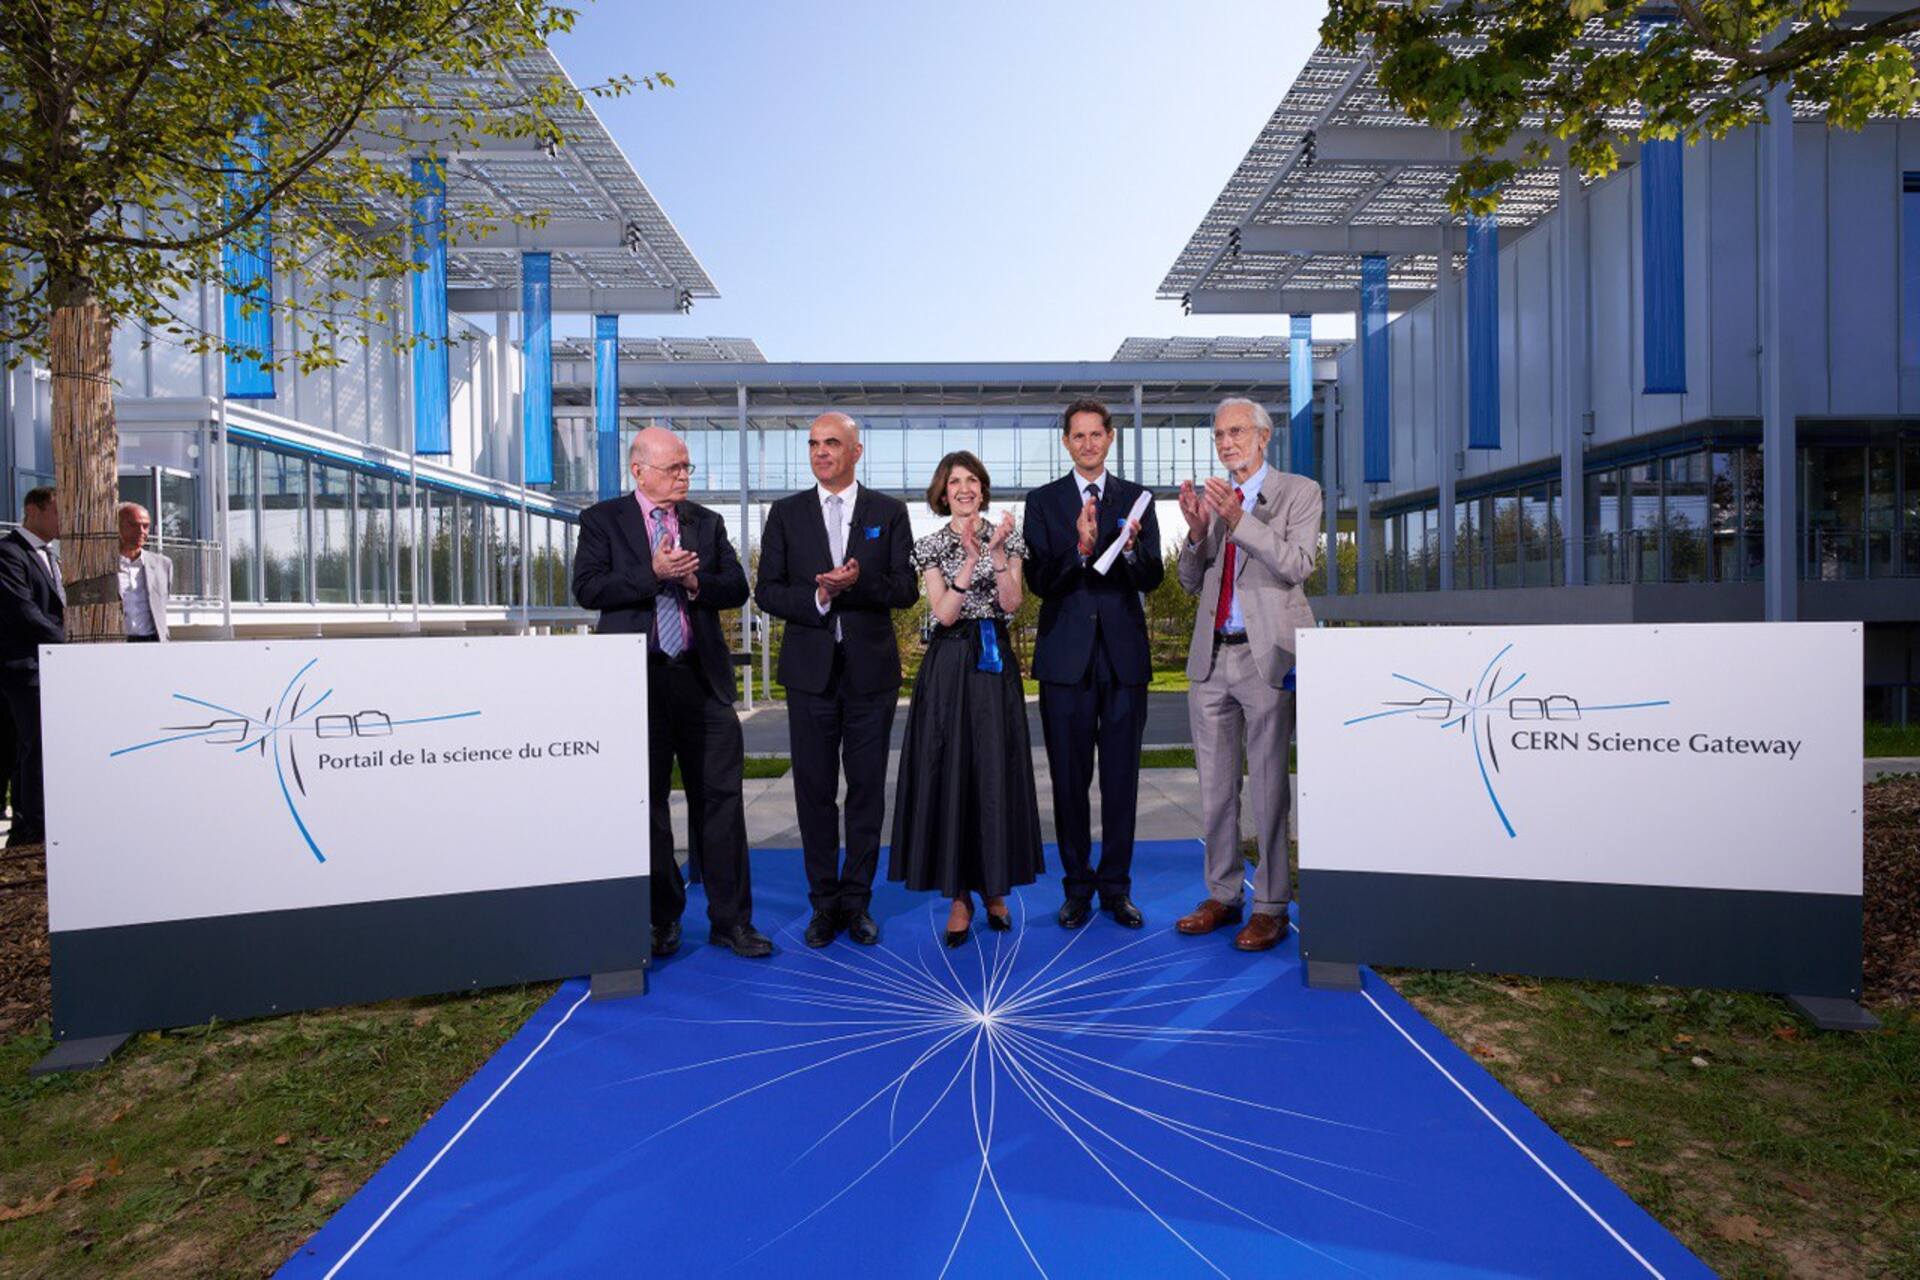 CERN Science Gateway: Eliezer Rabinovici, Alain Berset, Fabiola Gianotti, John Ekann en Renzo Piano